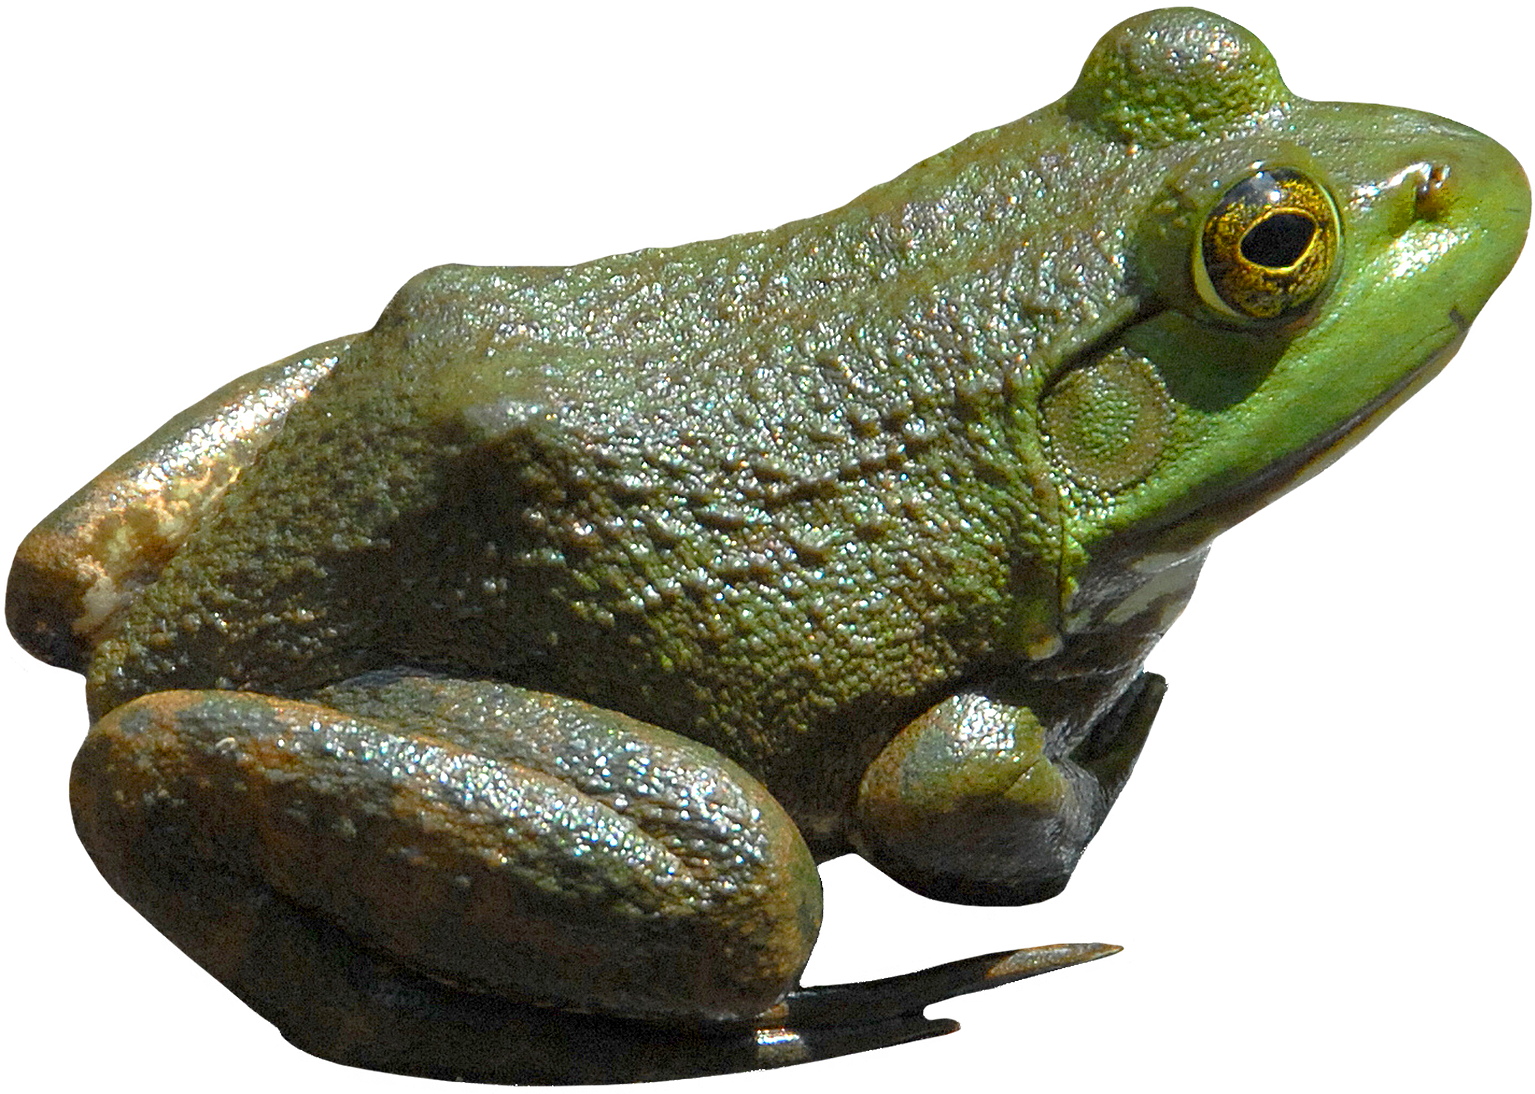 Frog PNG Image